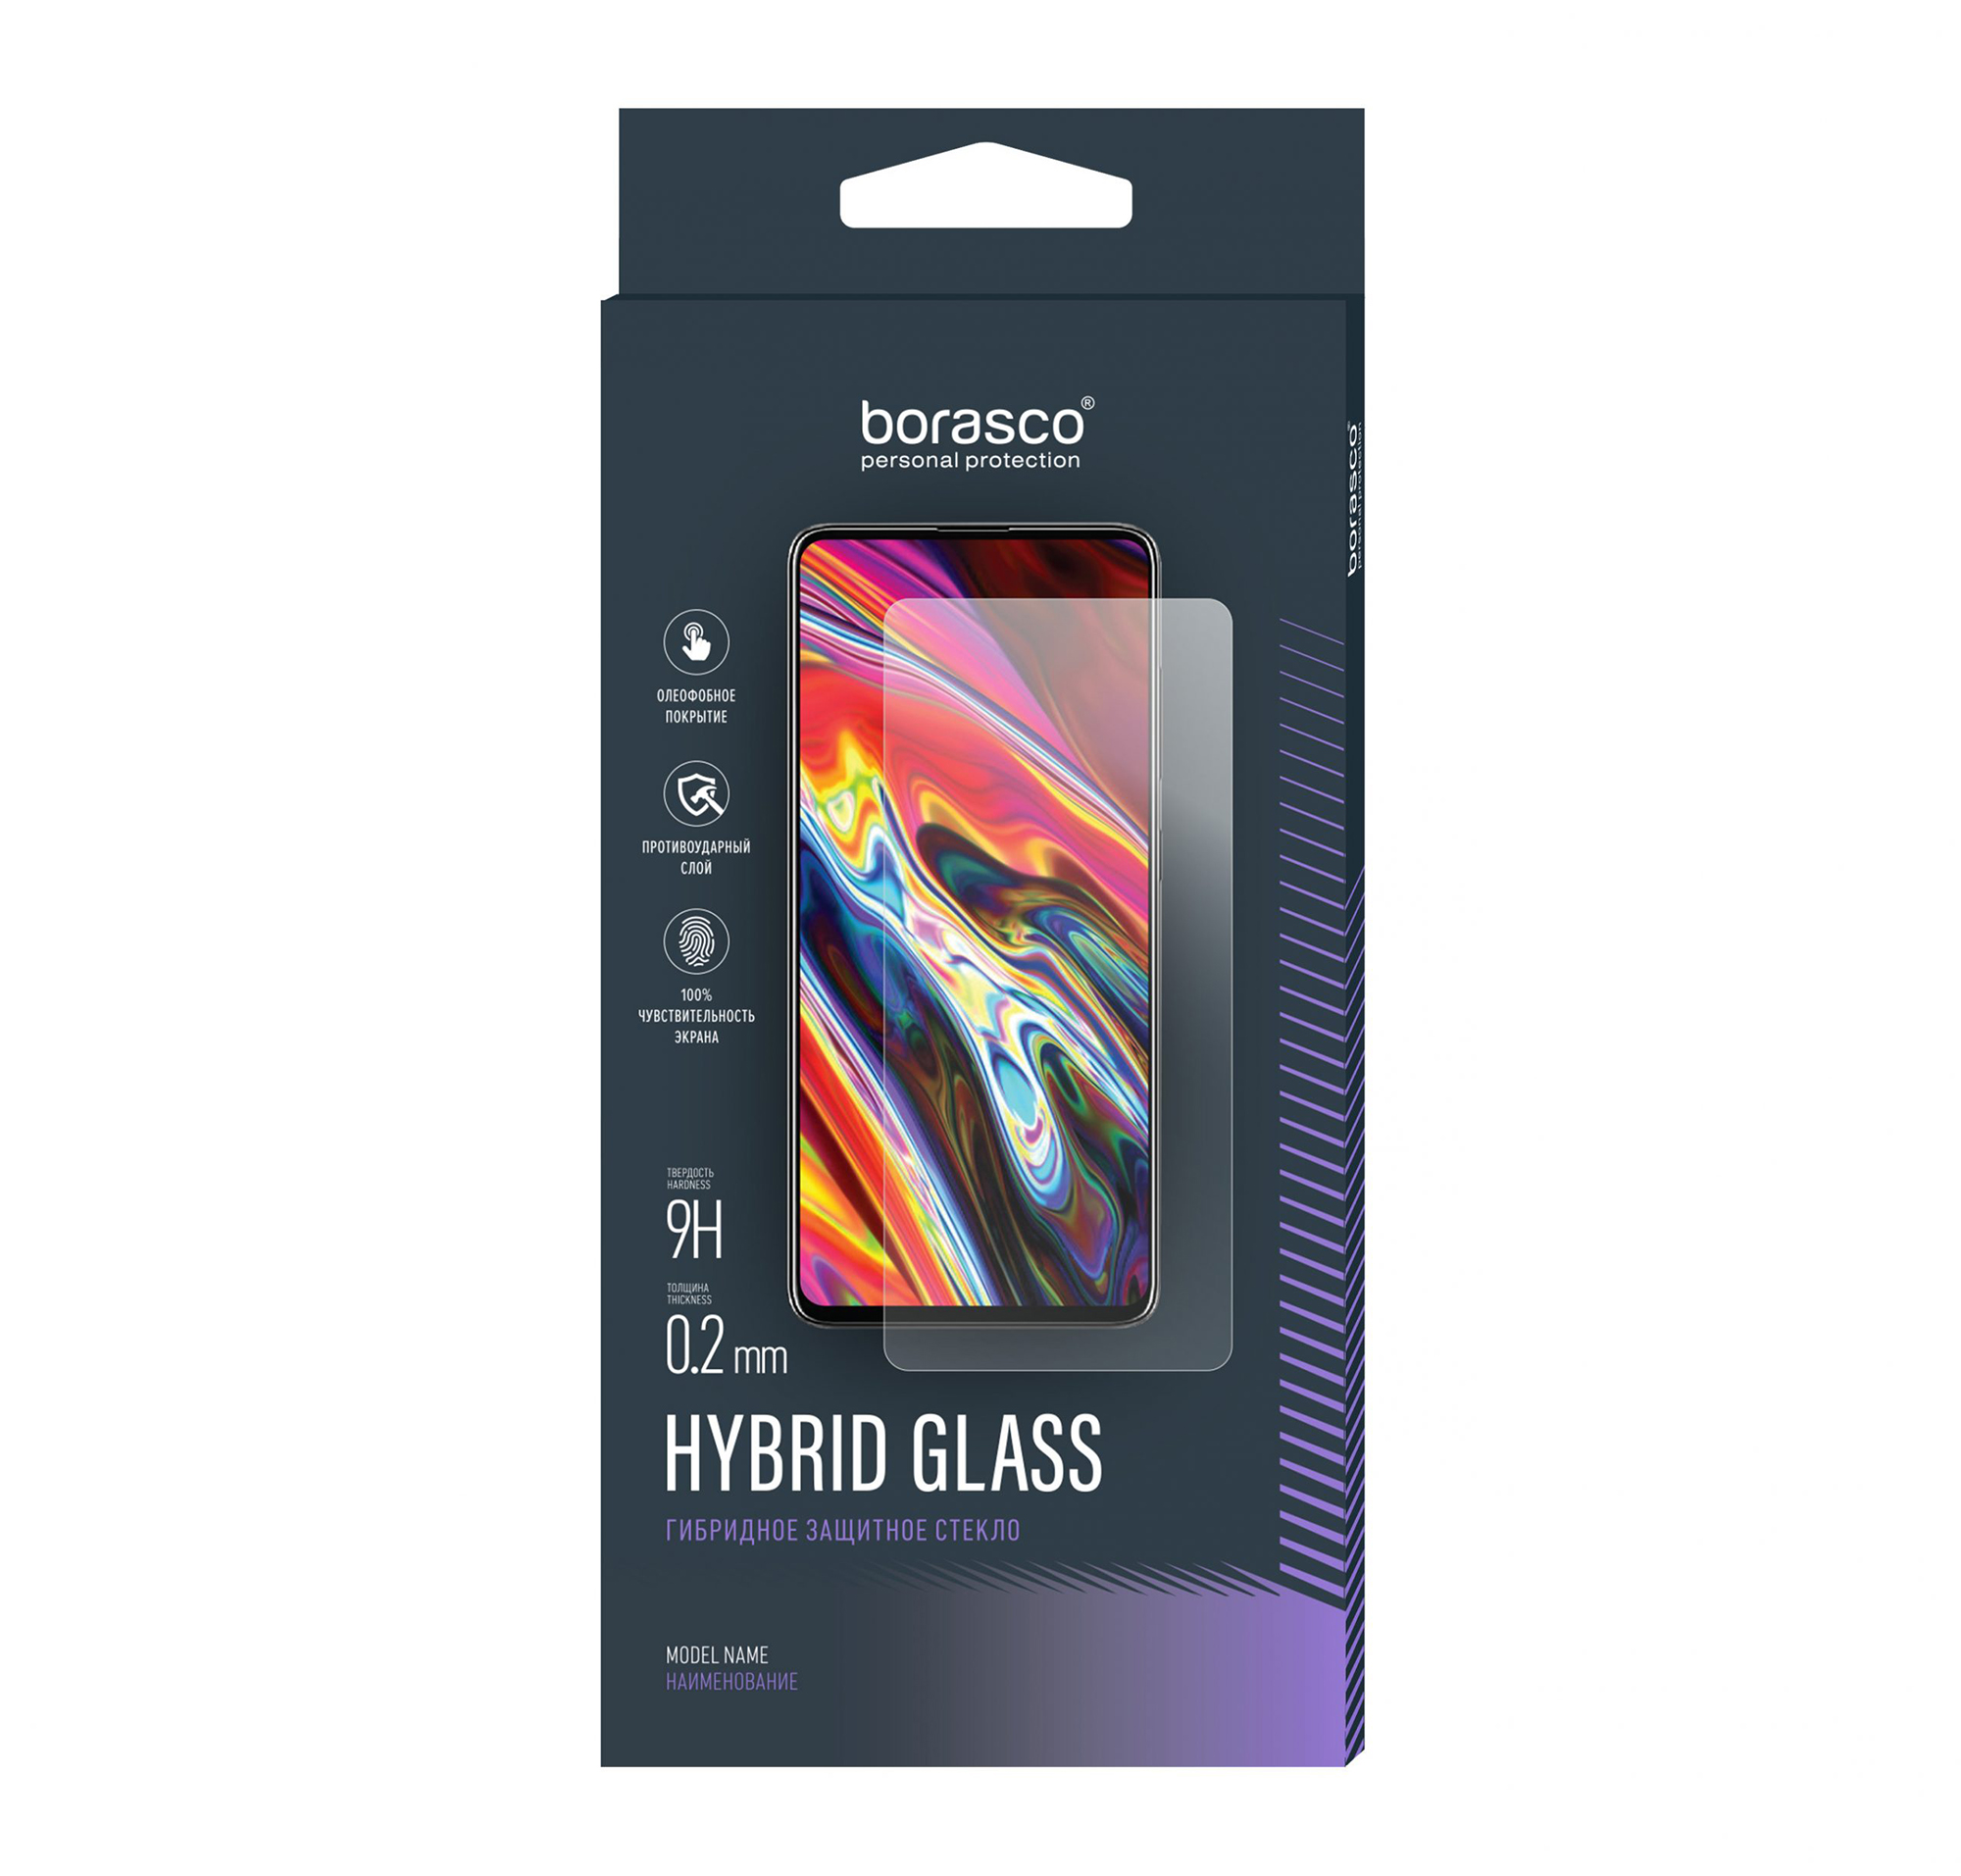 Защитное стекло Hybrid Glass для Xiaomi Mi 10T/ Mi 10T Pro защитное стекло borasco 0 26 mm для xiaomi mi 10t mi 10t pro